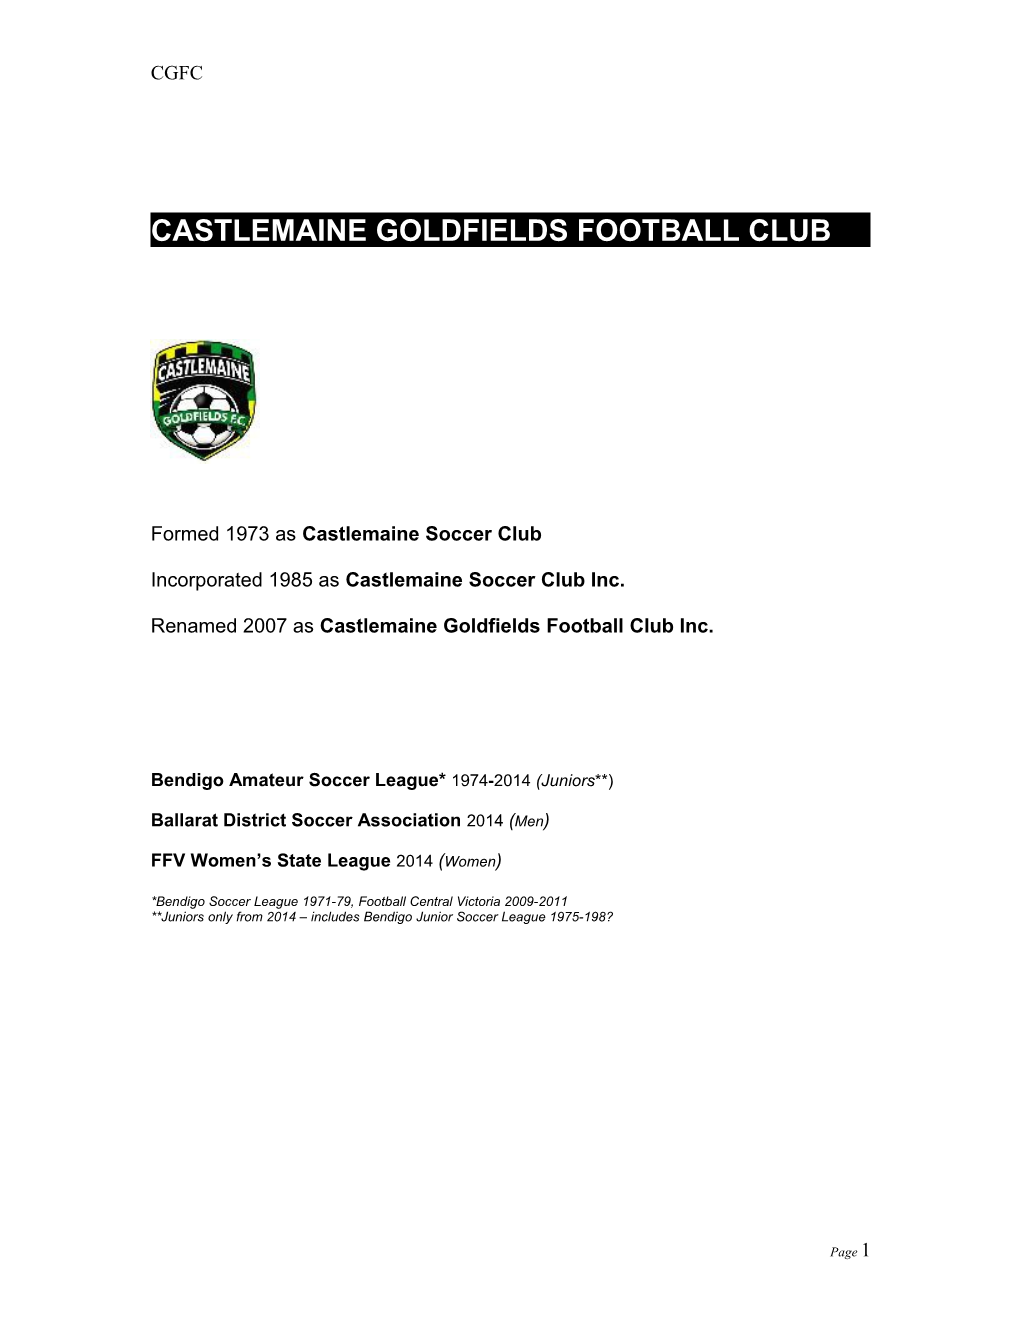 Castlemaine Goldfields FC